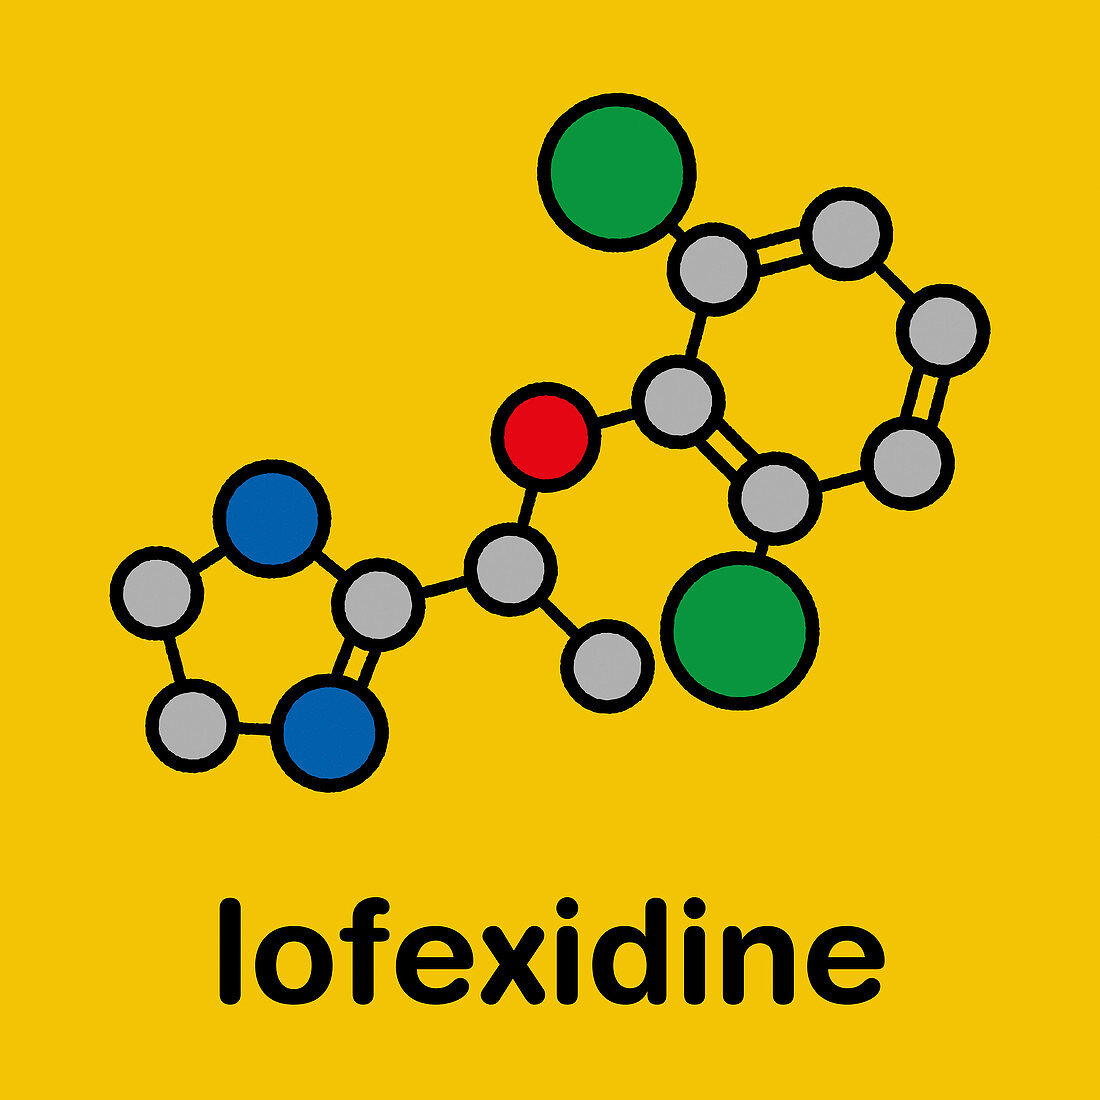 Lofexidine opioid withdrawal treatment drug